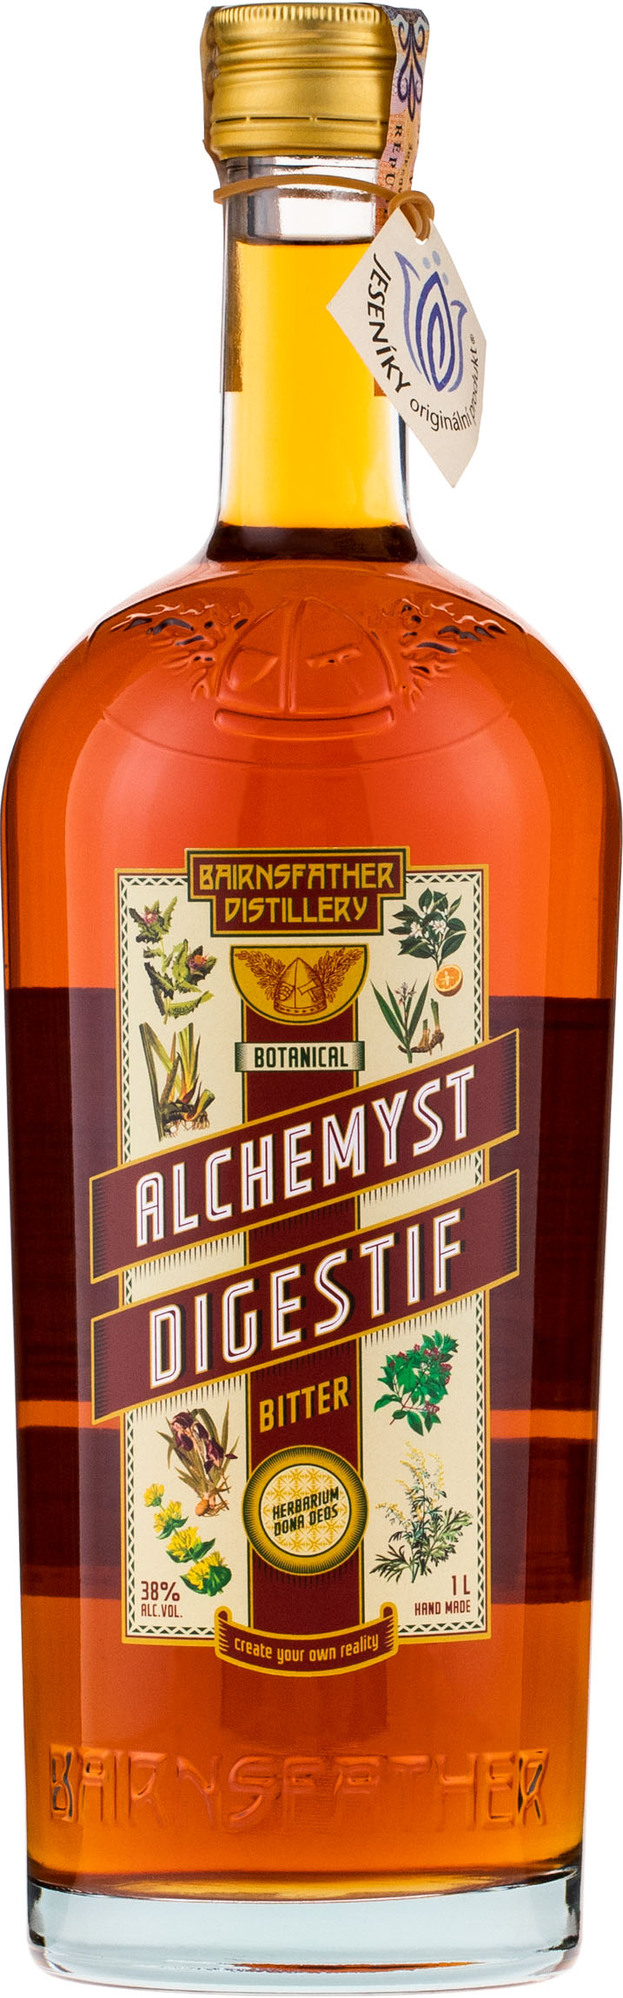 Bairnsfather Alchemyst Digestif 1l 38% (čistá fľaša)